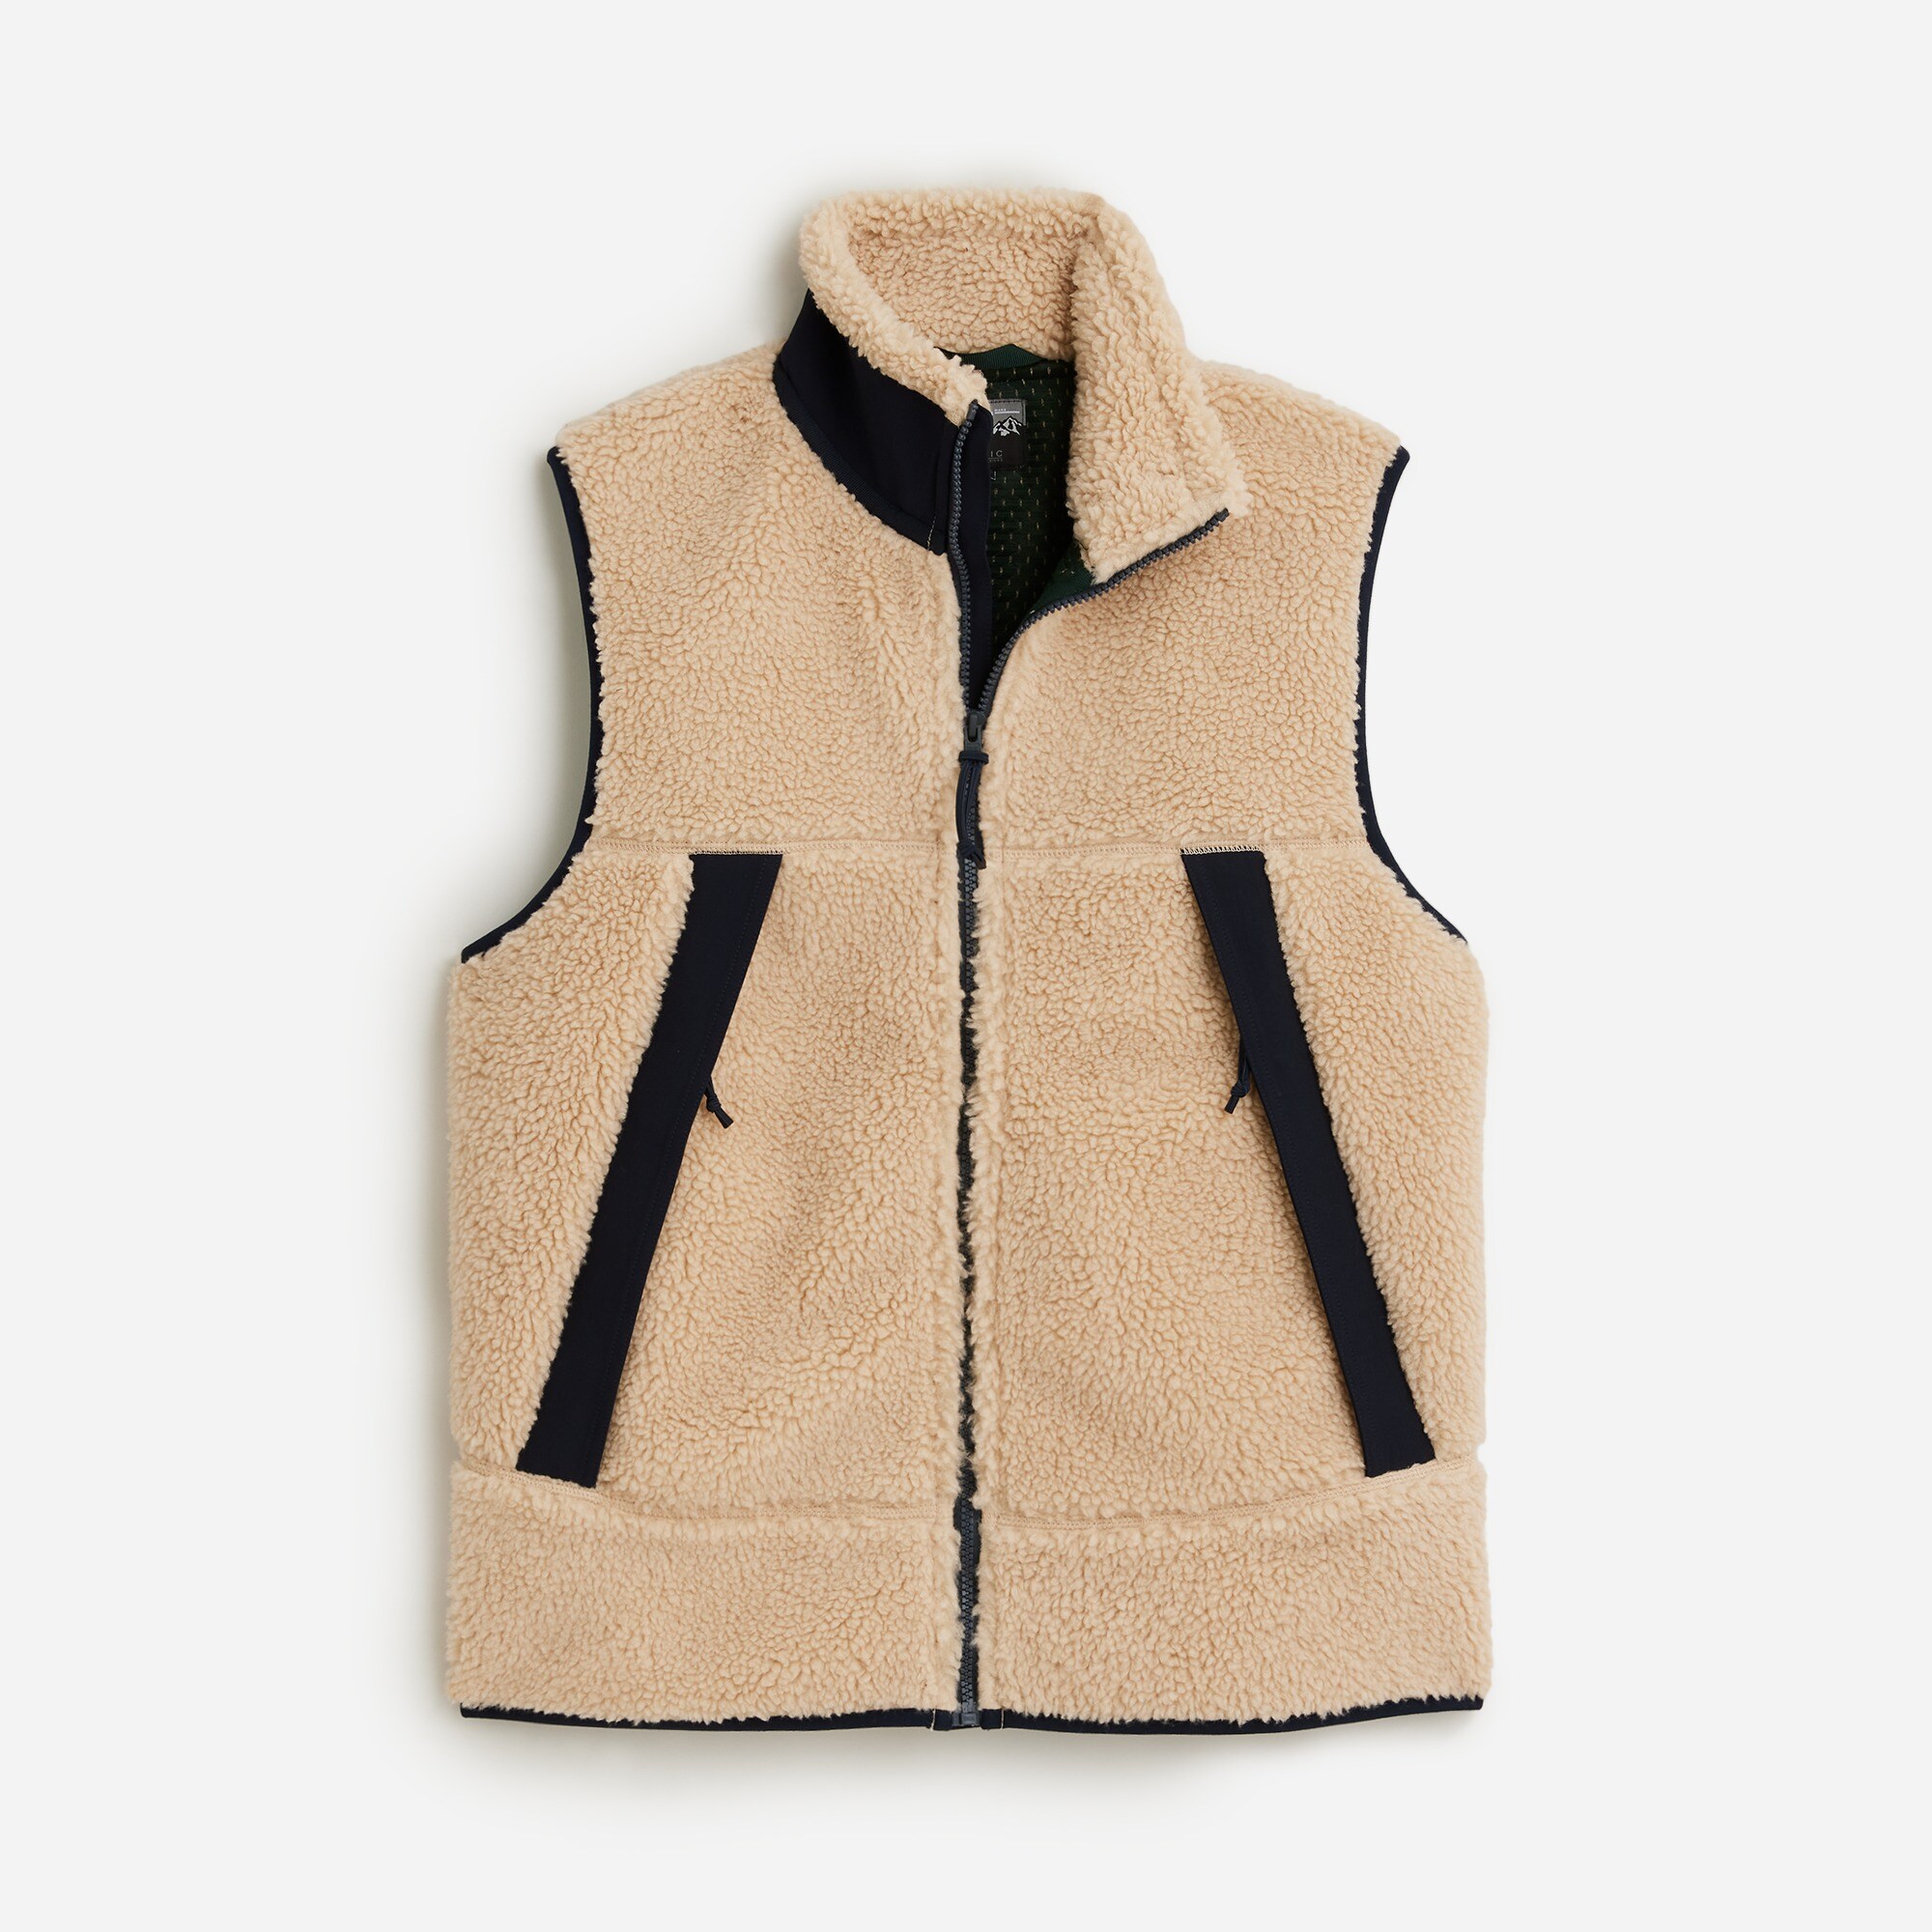  Nordic sherpa fleece vest